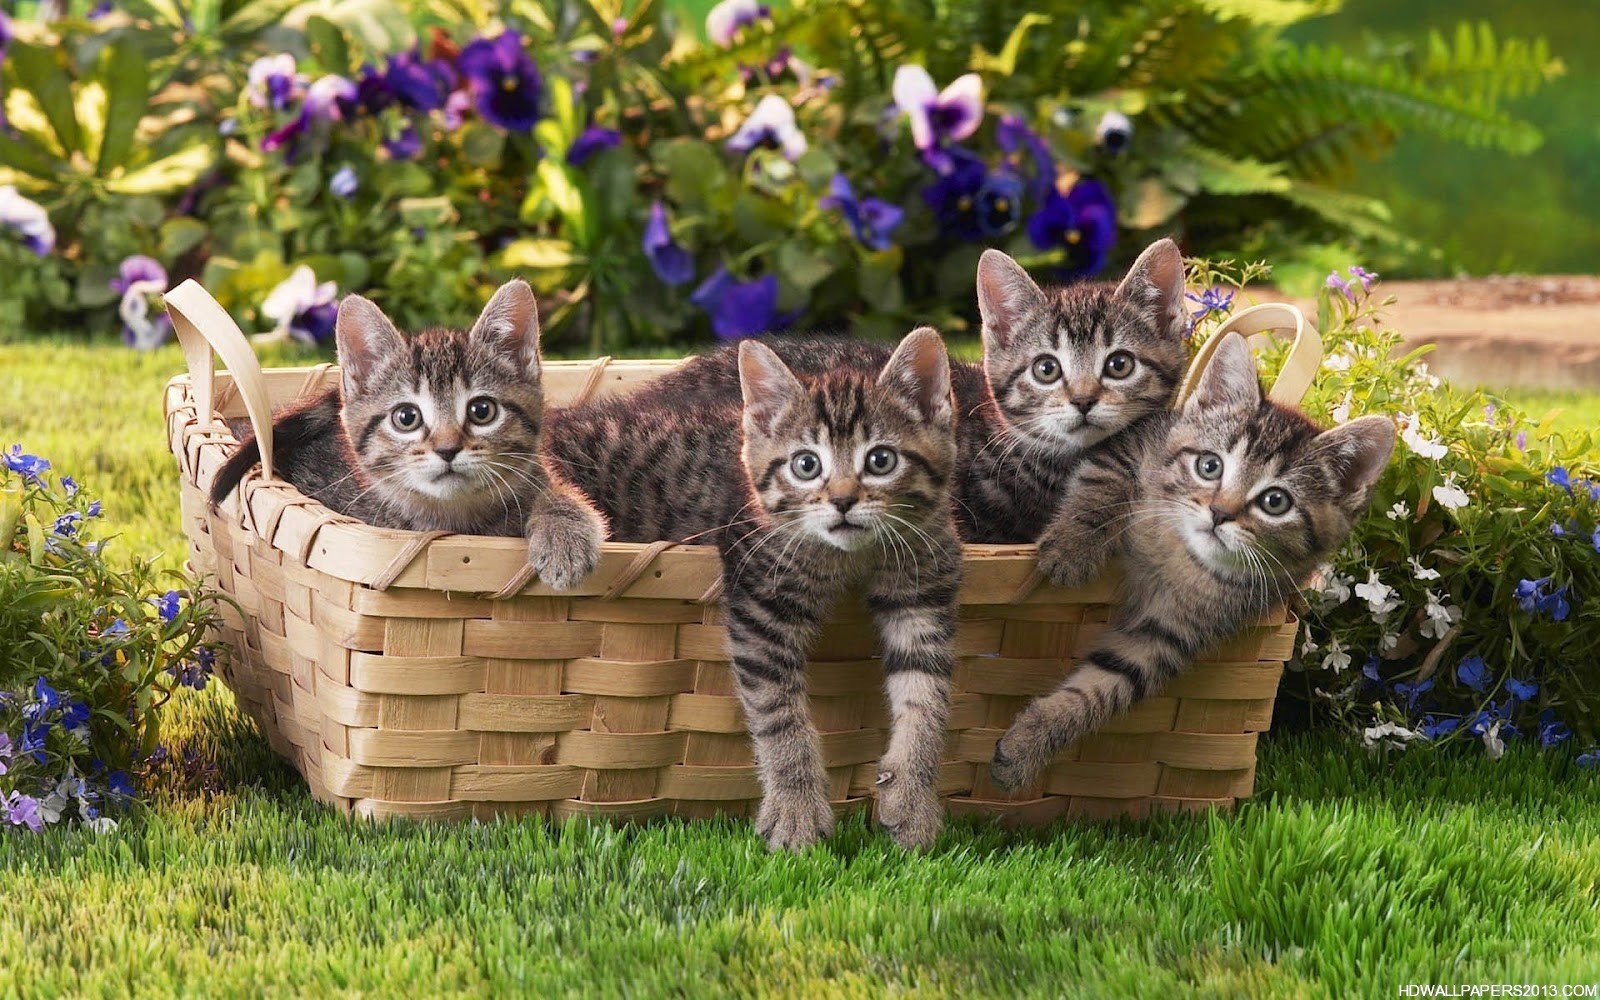 47+] Kitten Wallpapers Free Download - WallpaperSafari